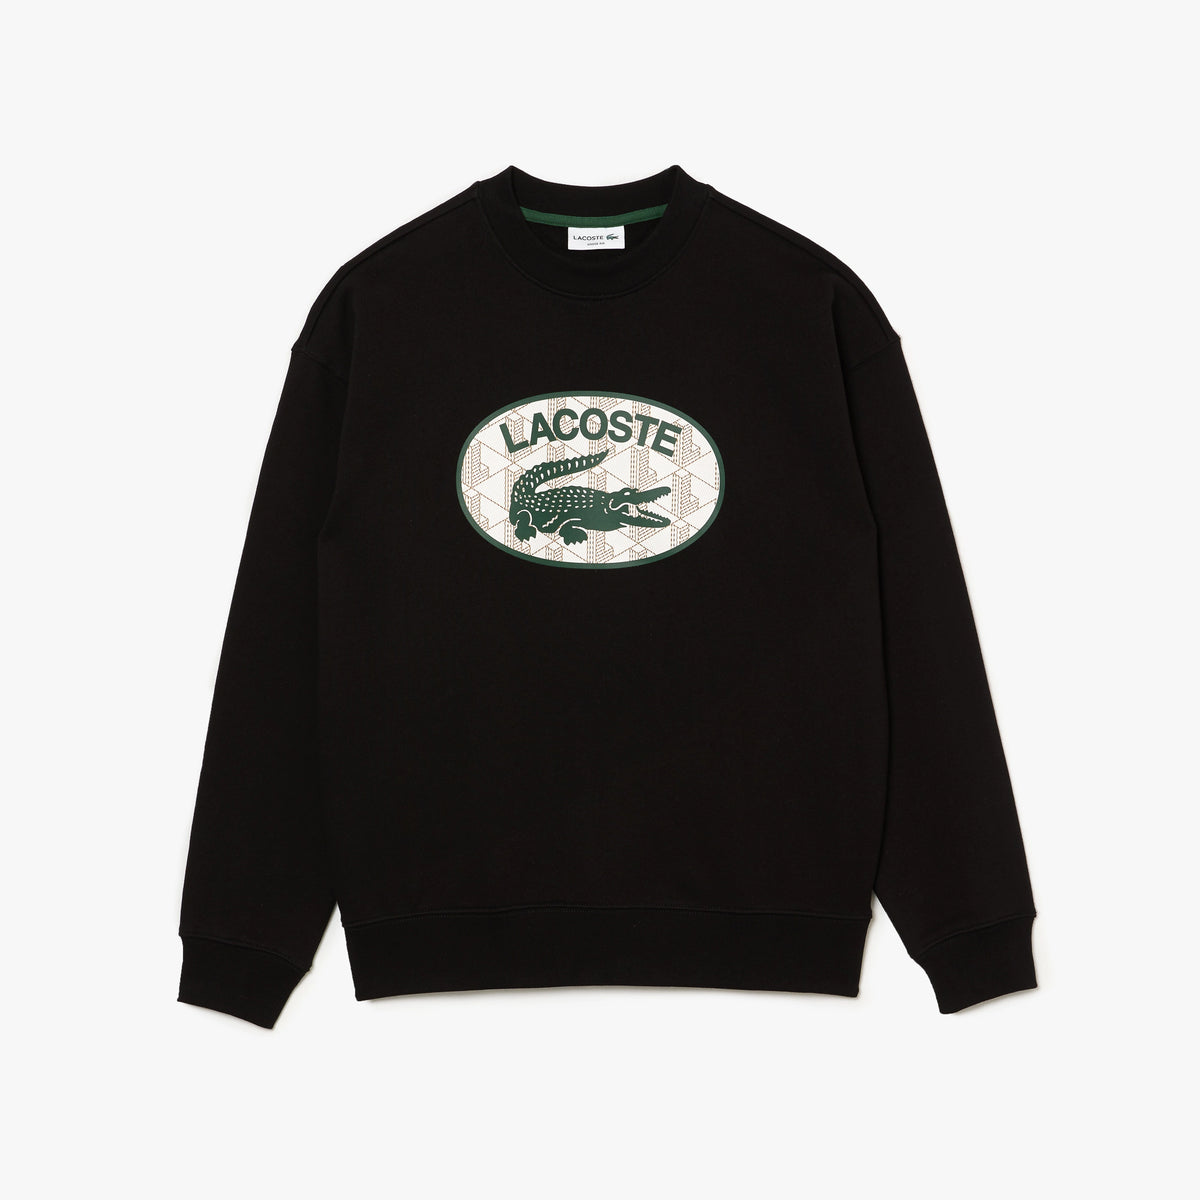 Lacoste - Branded Monogram Print Sweatshirt - Black